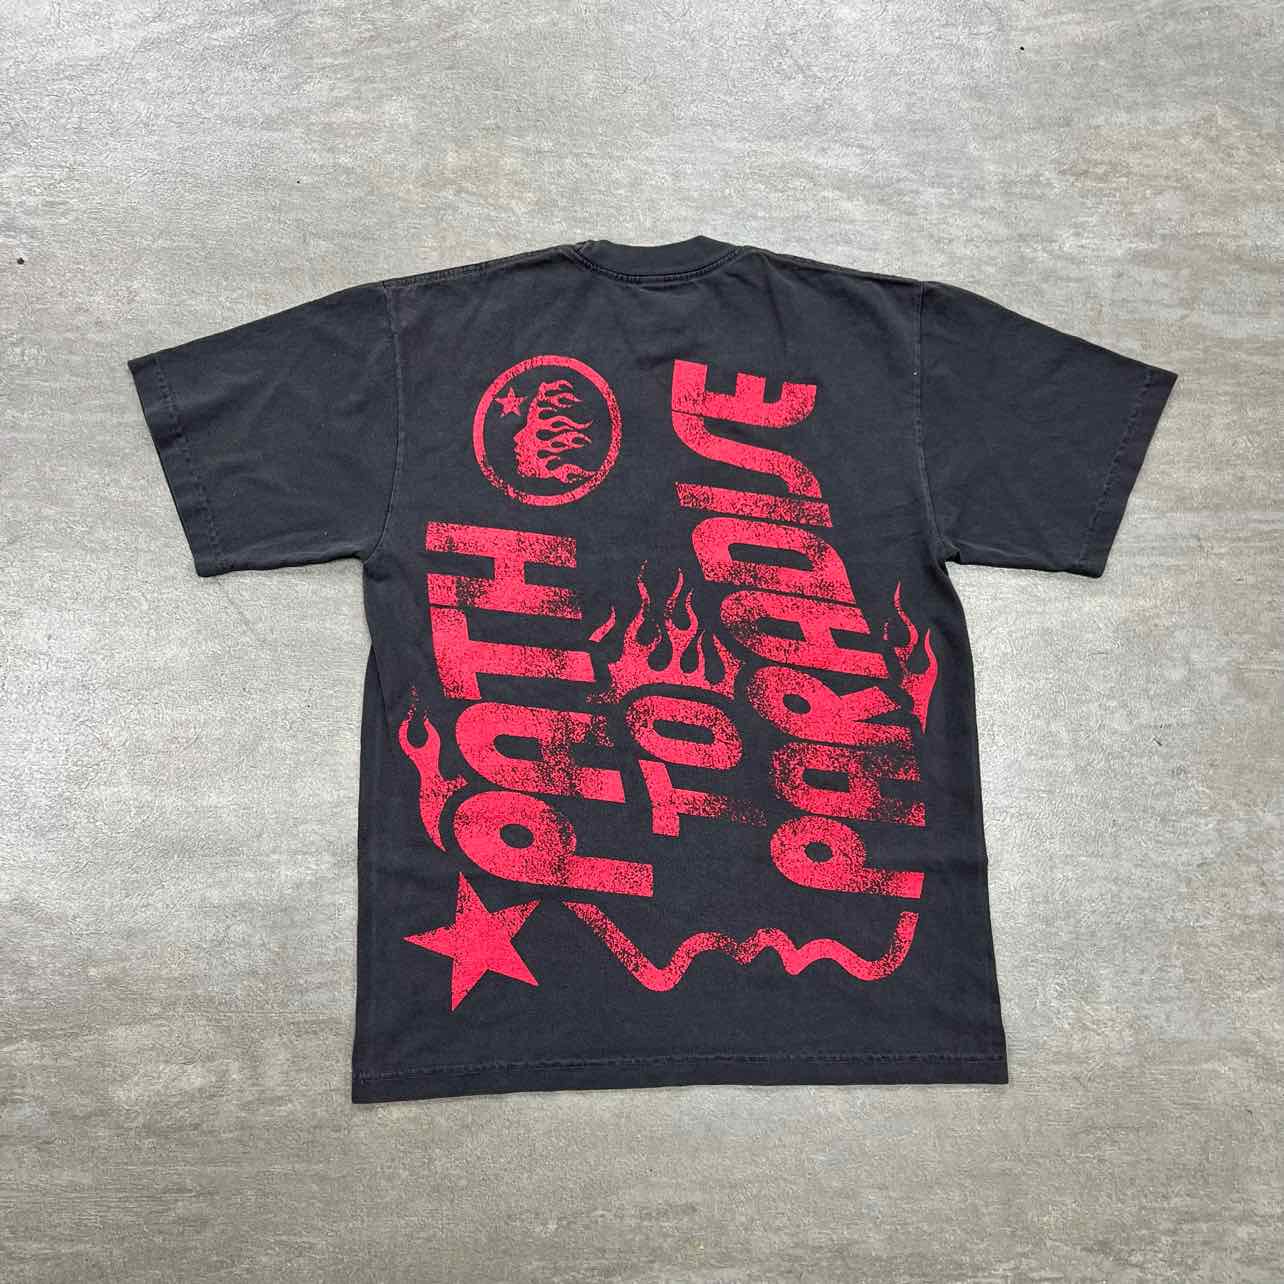 Hellstar T-Shirt "PATH TO PARADISE" Off Black New Size XL